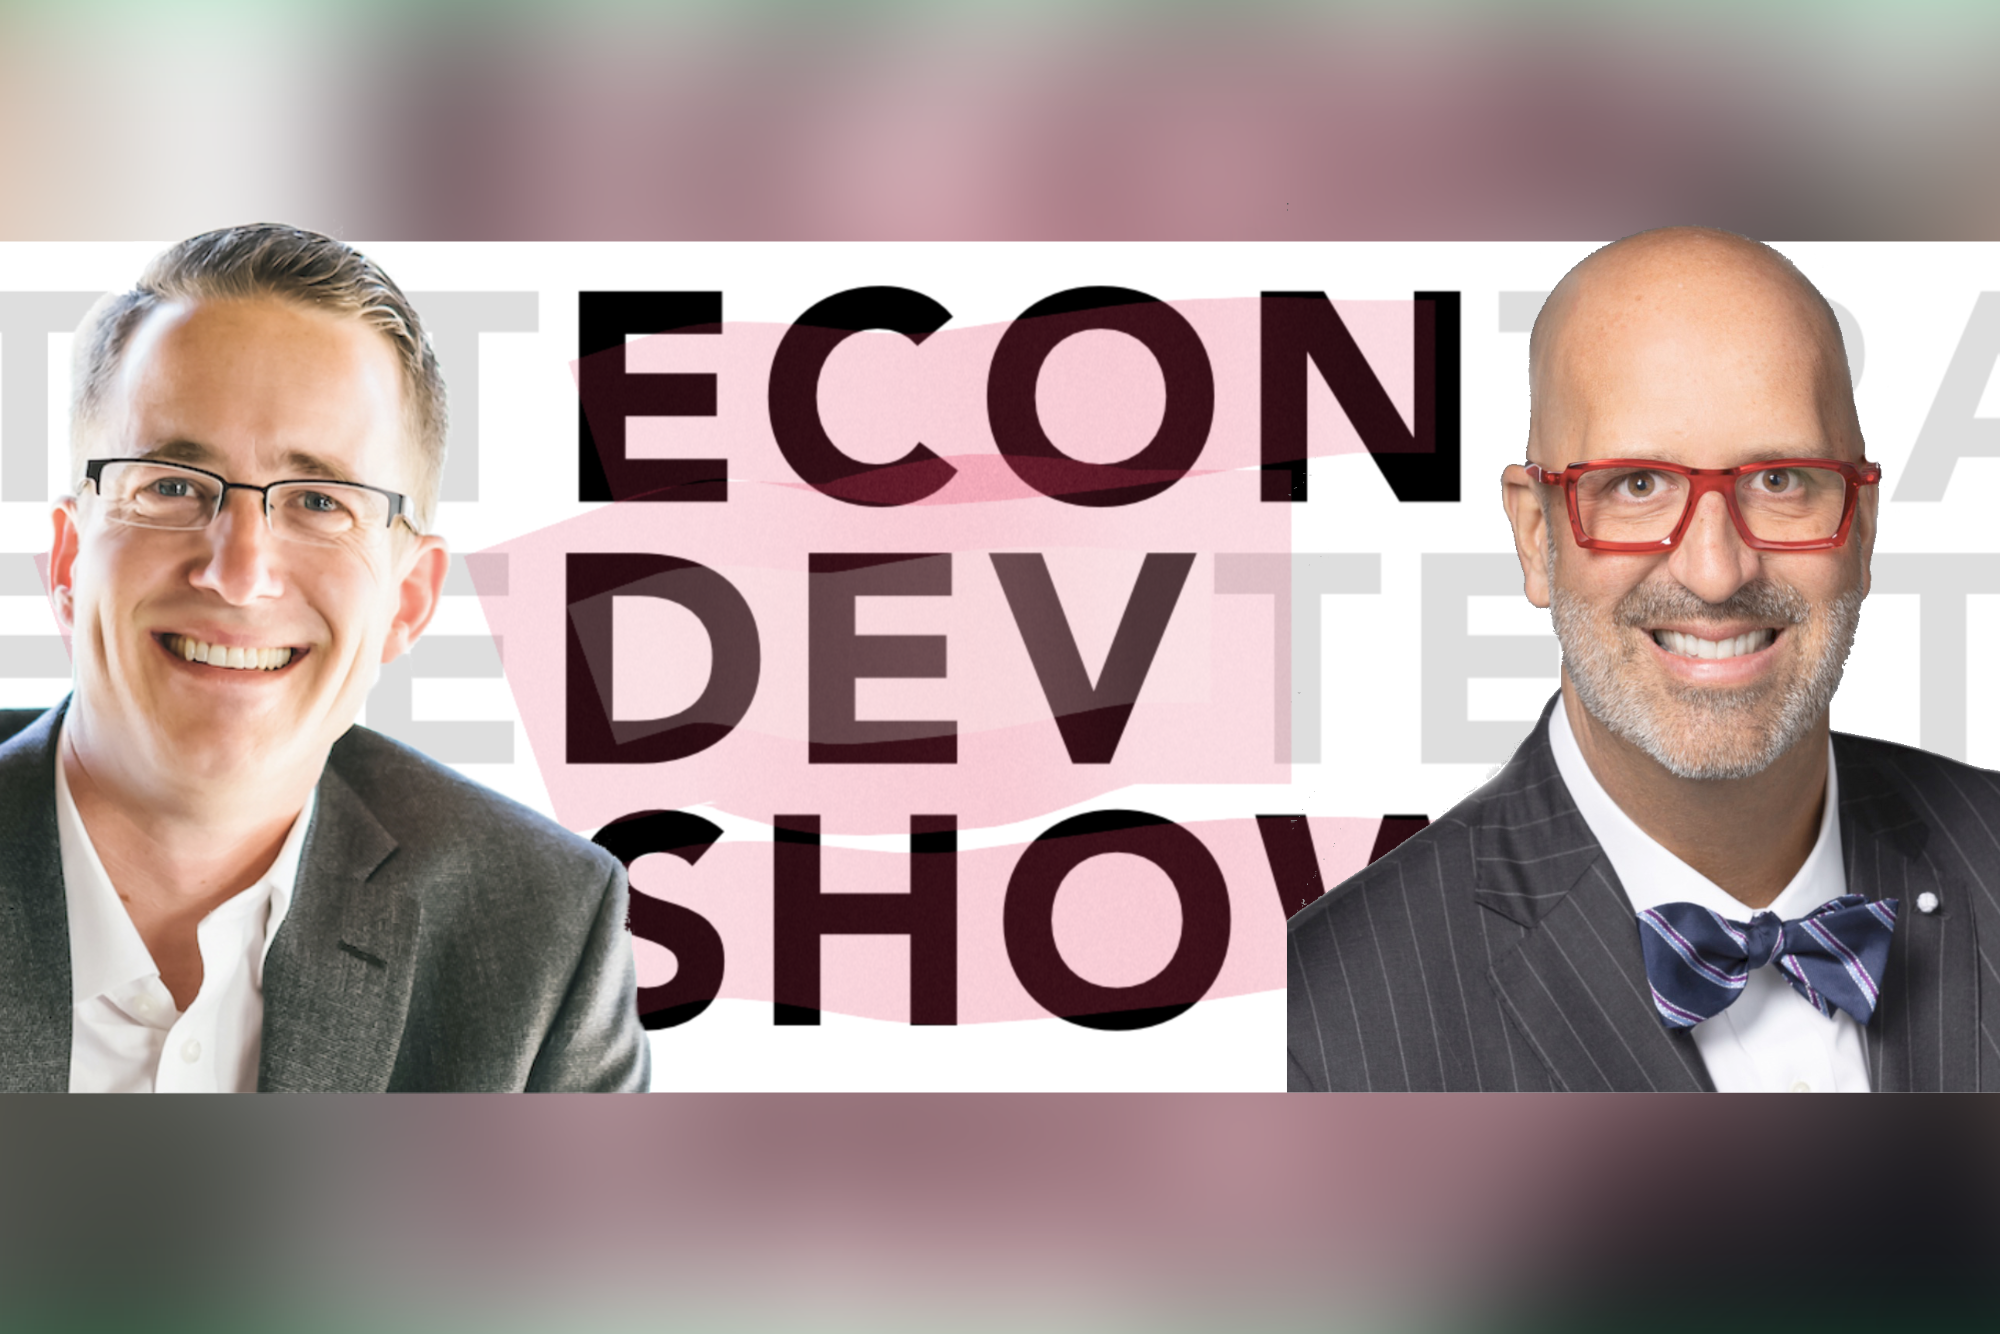 Podcast Episode 72 - Utility Economic Development in 2022 with Richard Cornelison